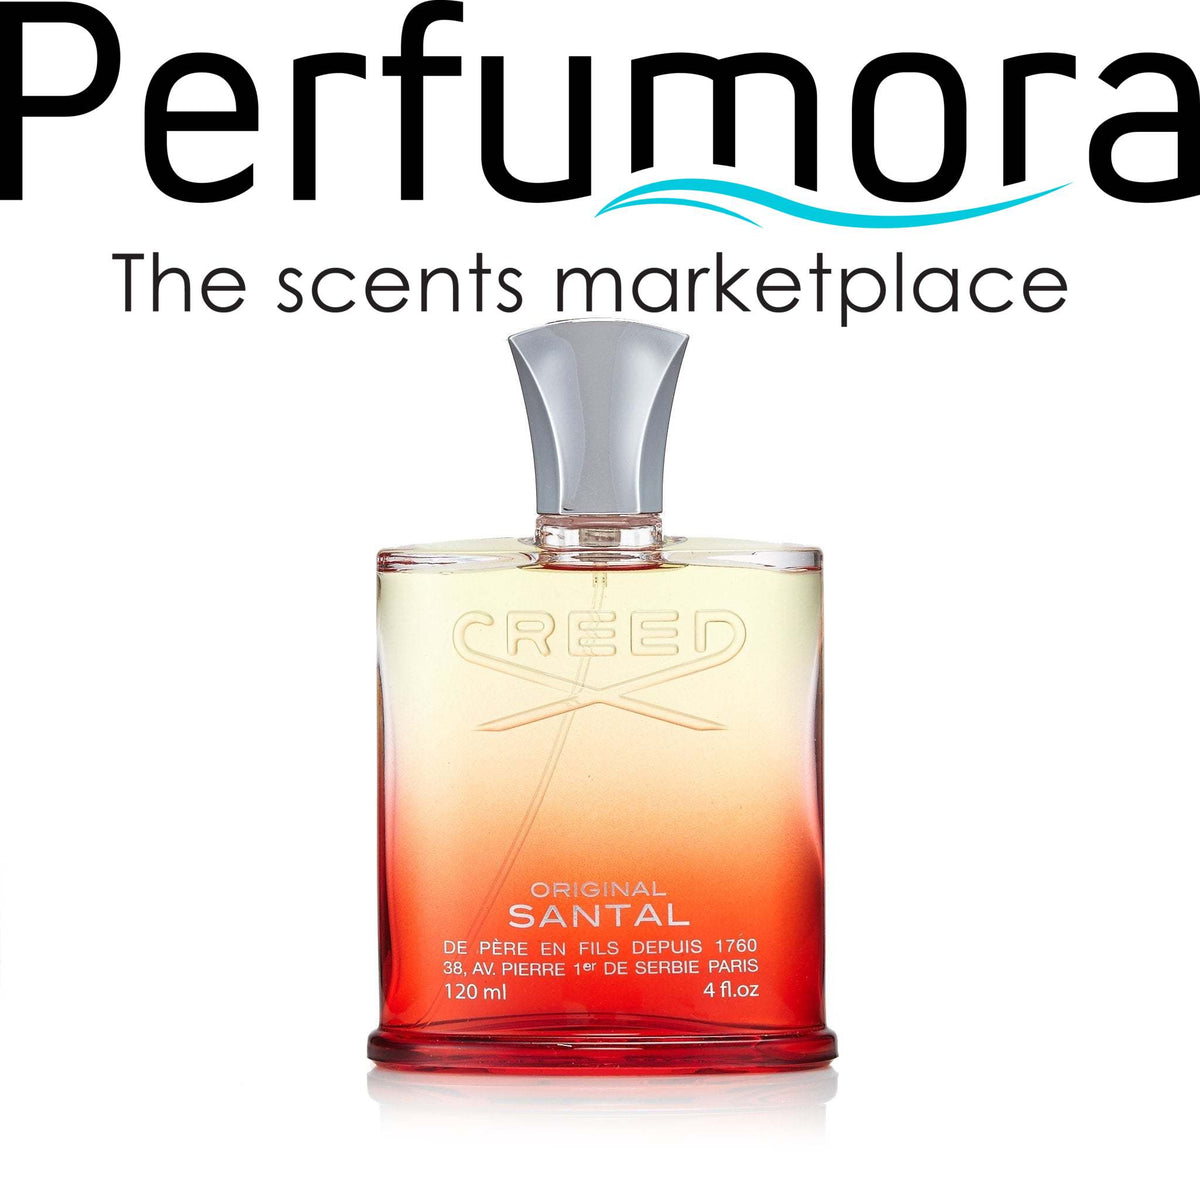 Original Santal Eau de Parfum Spray for Men by Creed 4.0 oz.